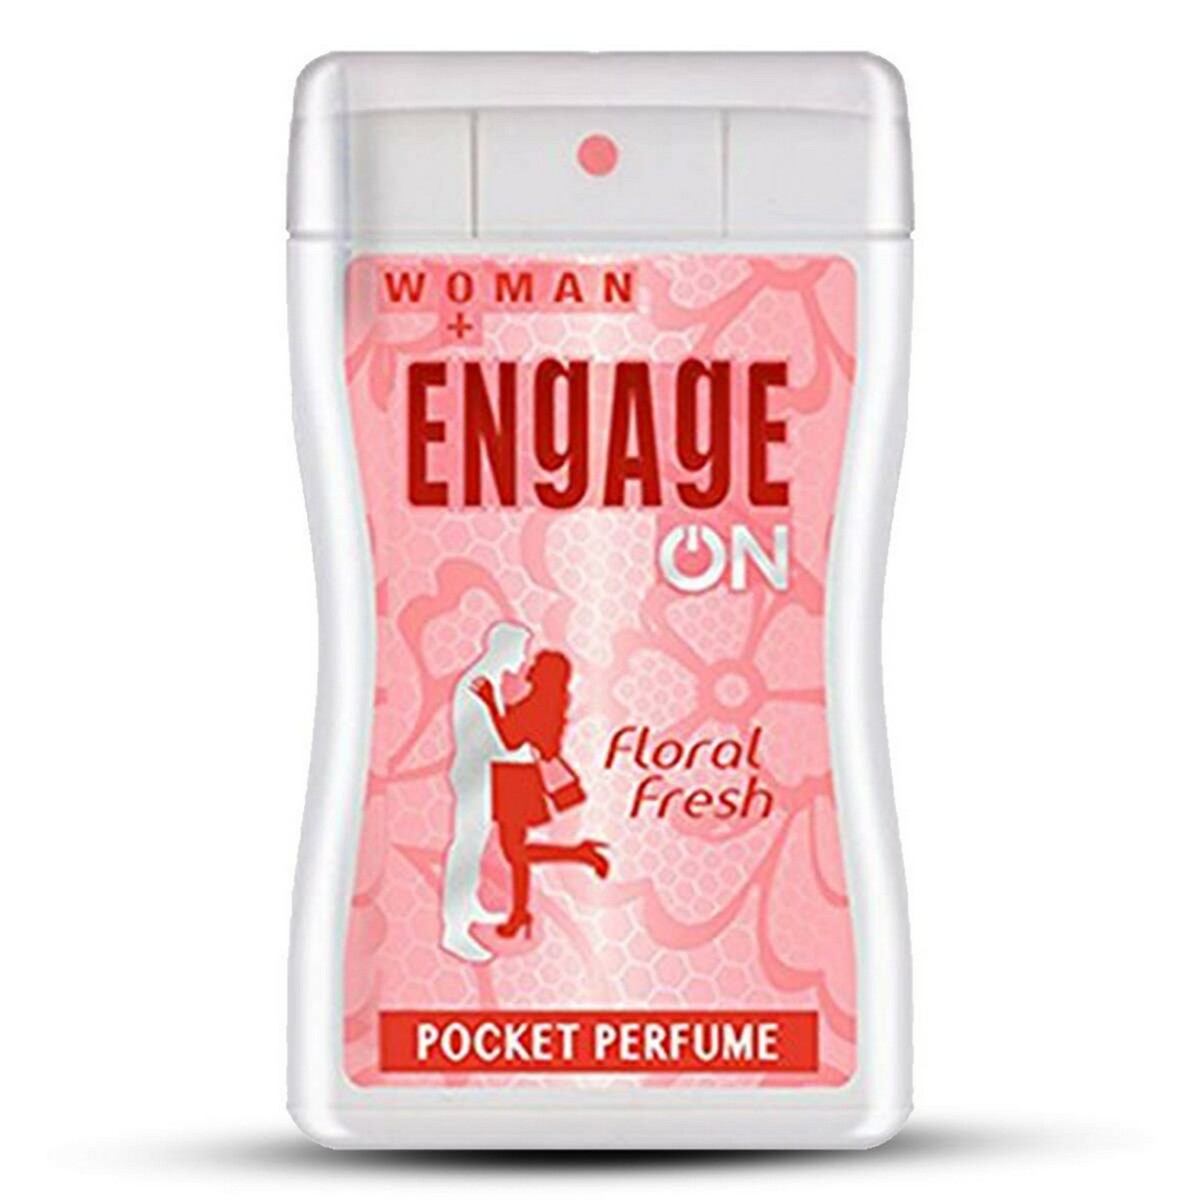 Engage Women Deo Pocket Perfume Floral Fresh 18ml